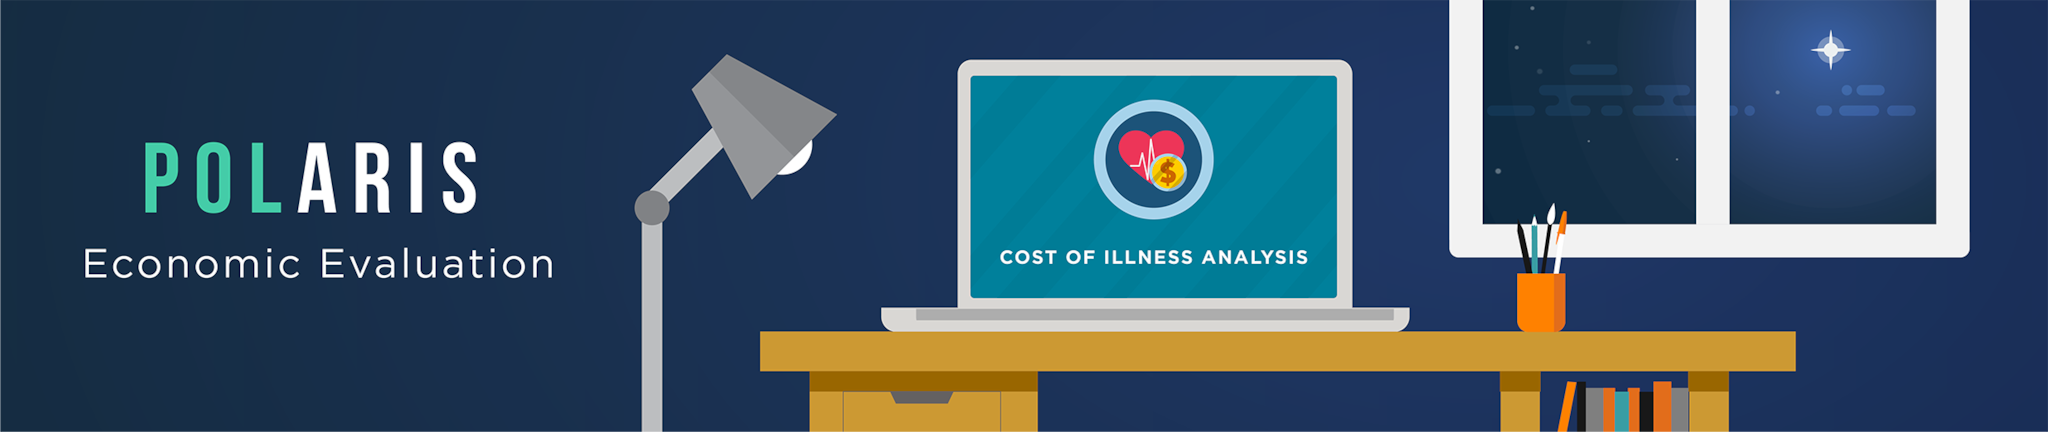 polaris economic evaluation - cost of illness analysis